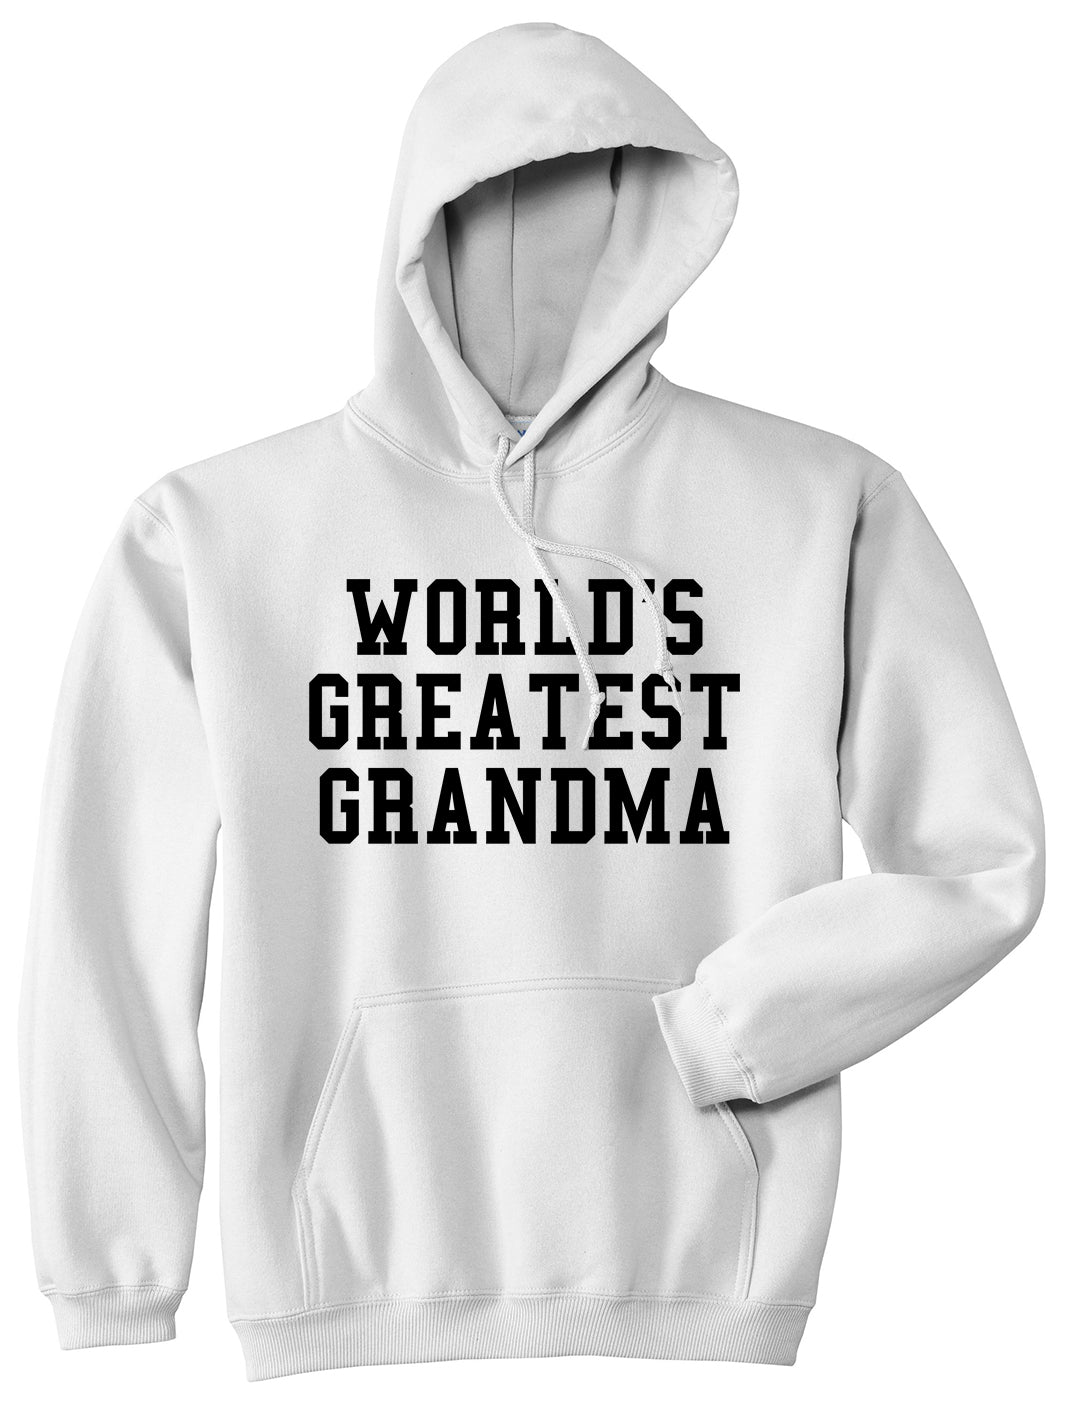 Worlds Greatest Grandma Birthday Gift Mens Pullover Hoodie White